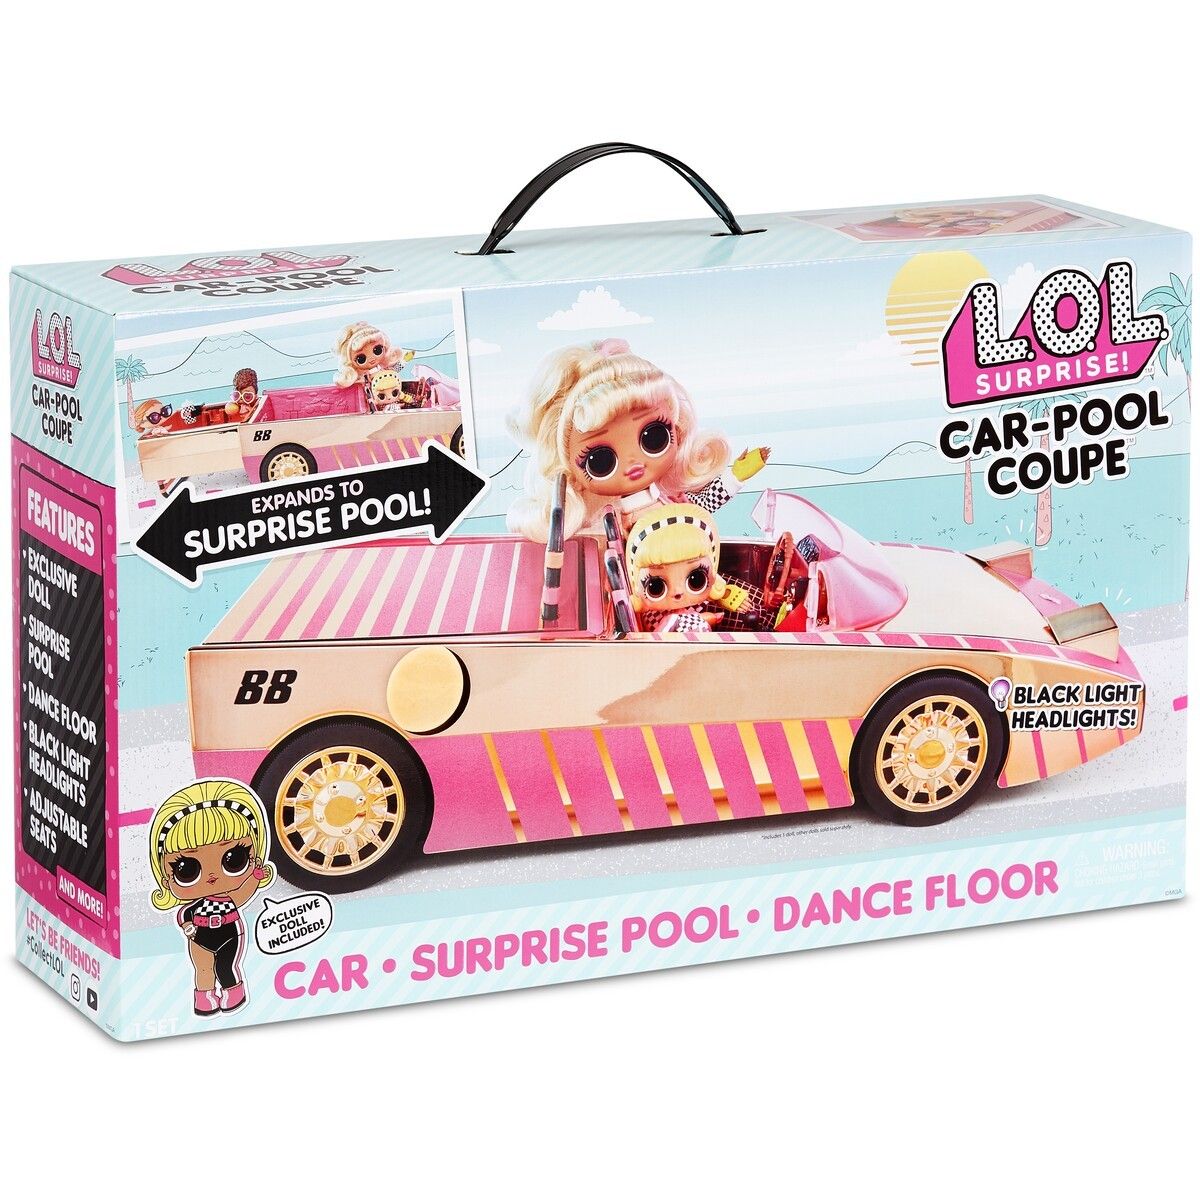 Lol surprise car-pool coupe